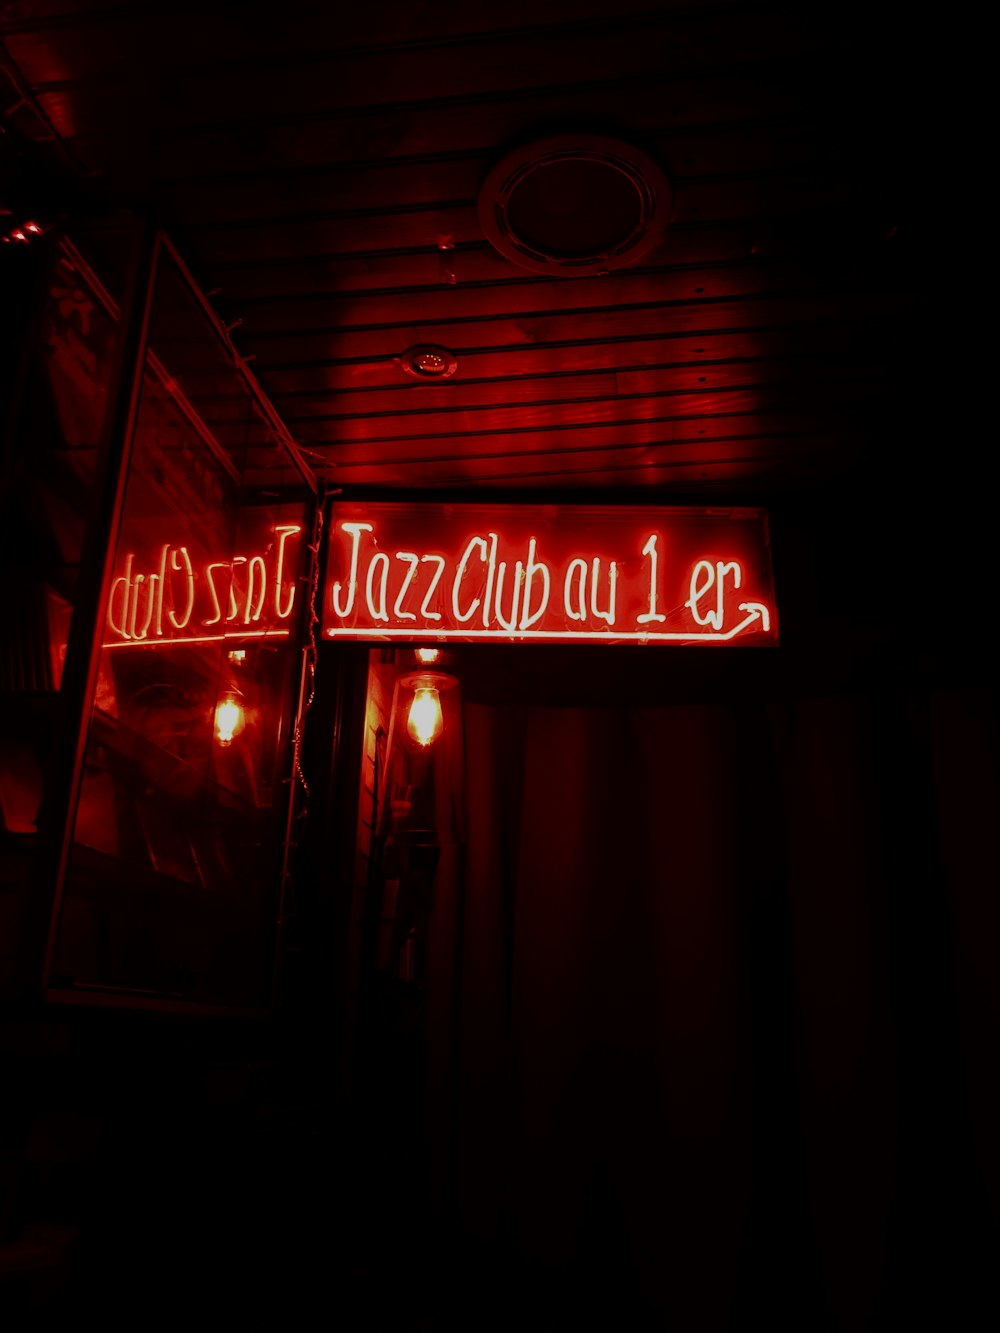 Jazz Club neon signage turned on